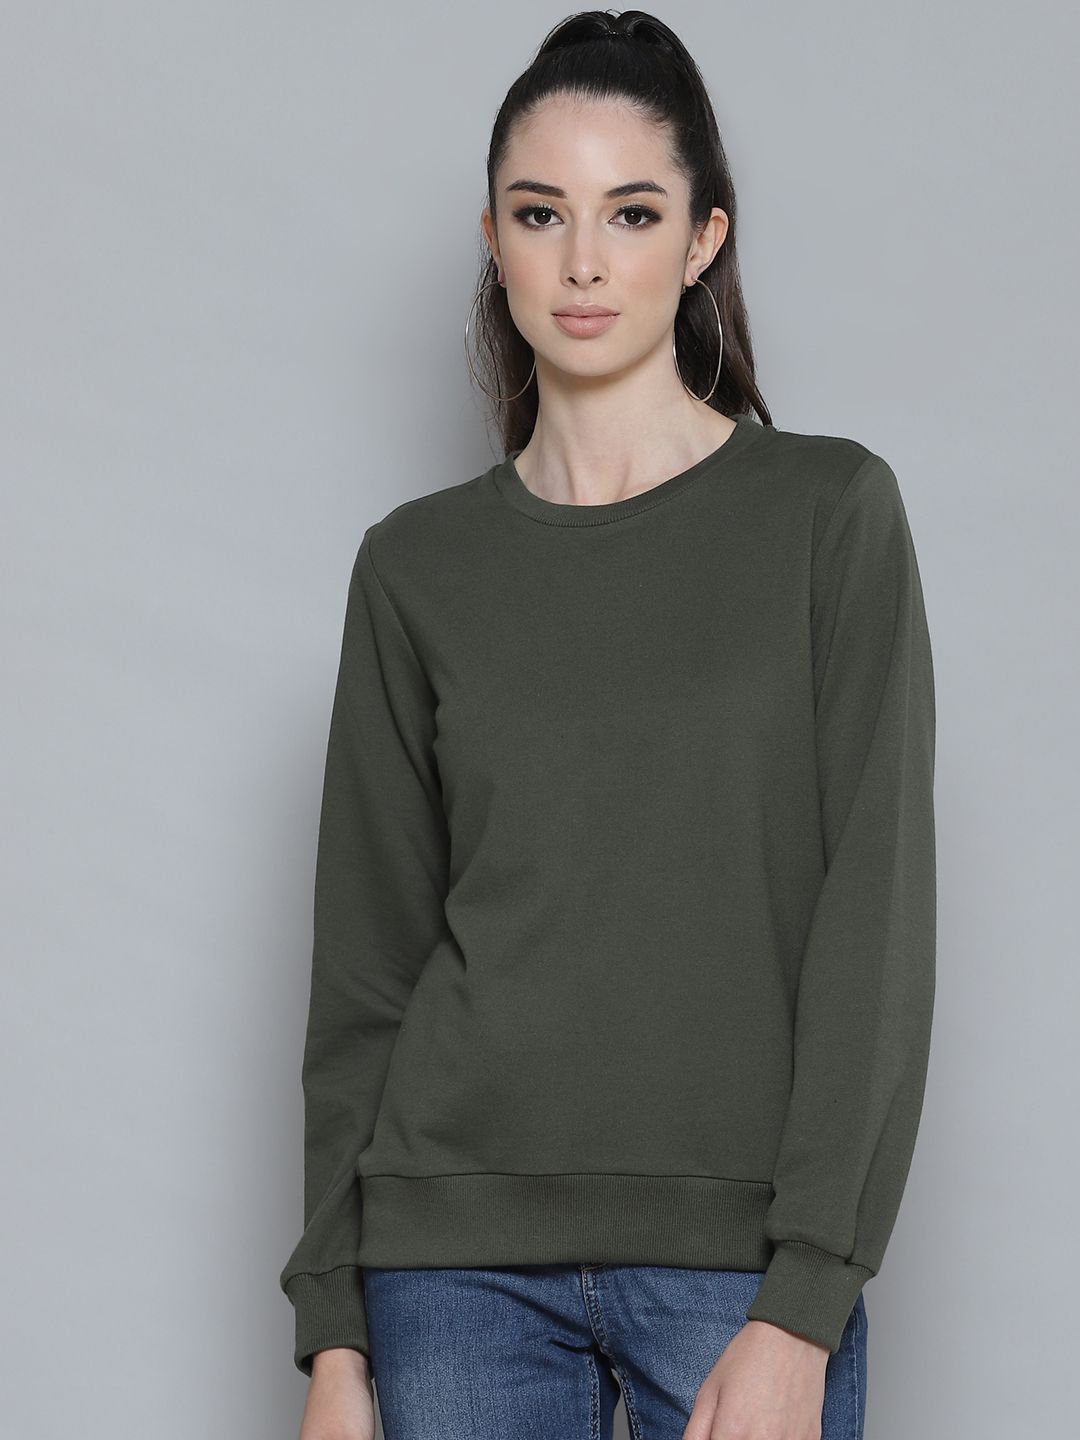 Femella Women Olive Green Solid Sweatshirt Price in India